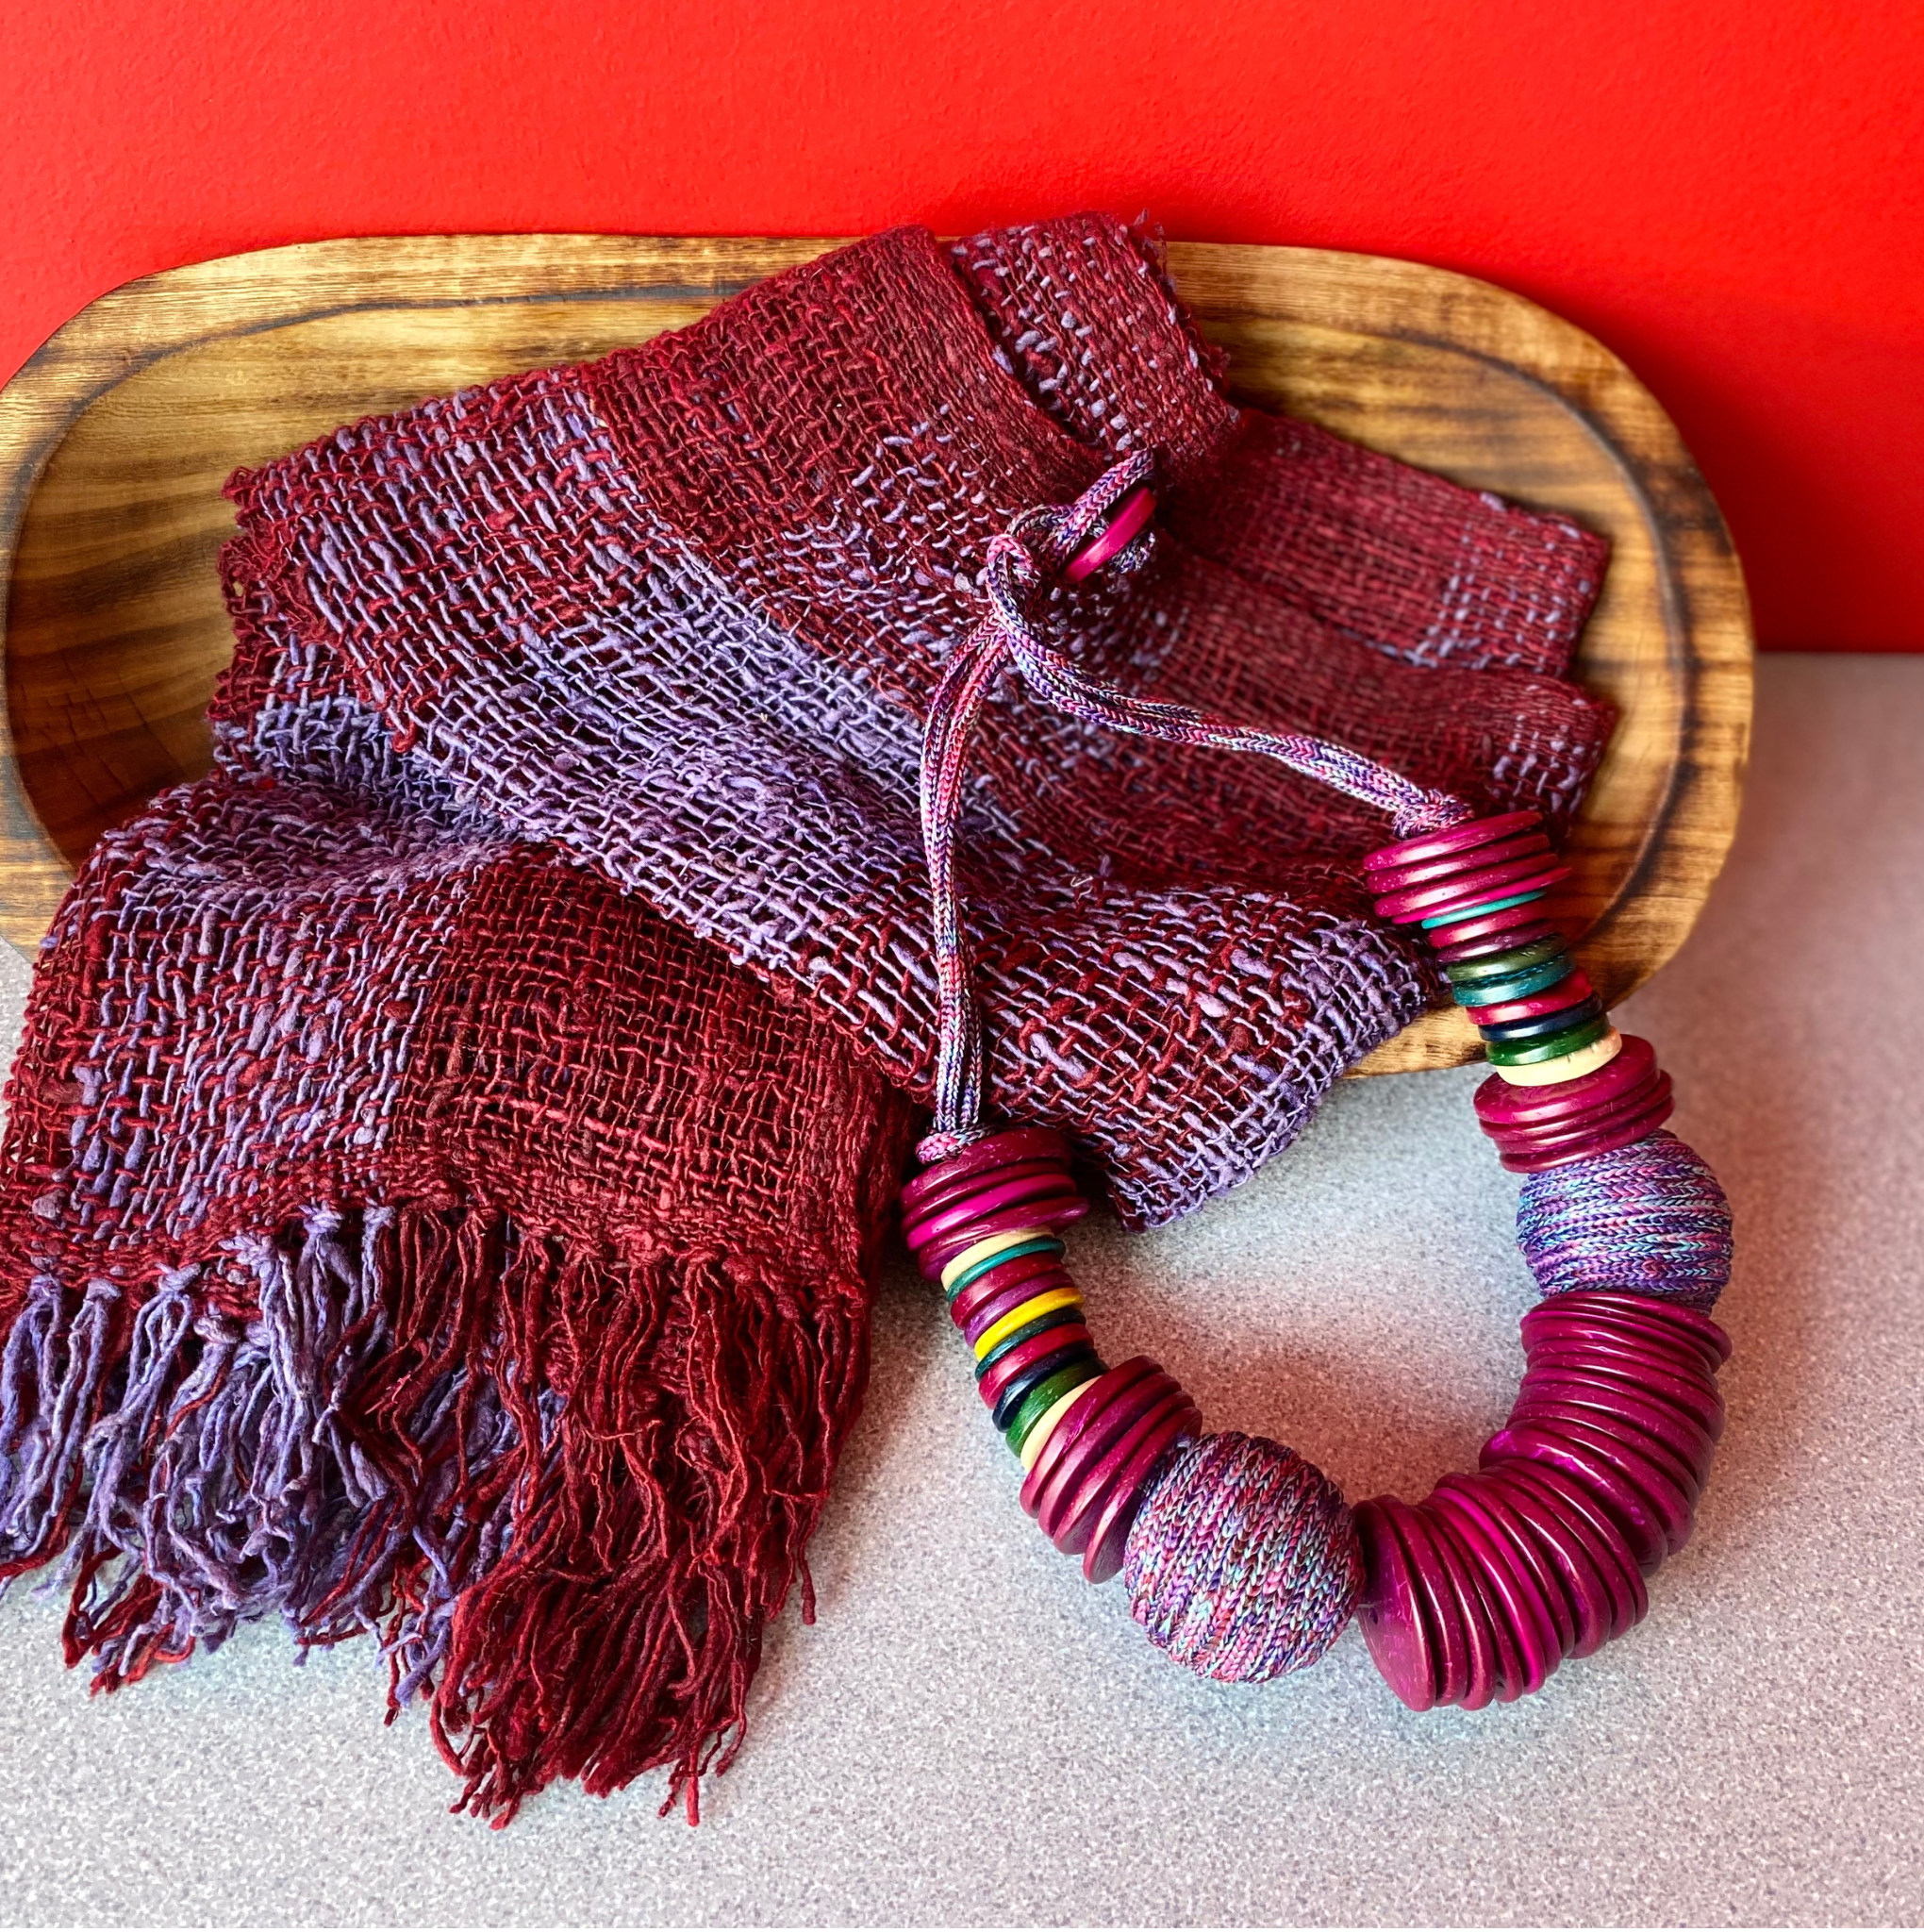 Raw Silk Scarf from Madagascar Handwoven